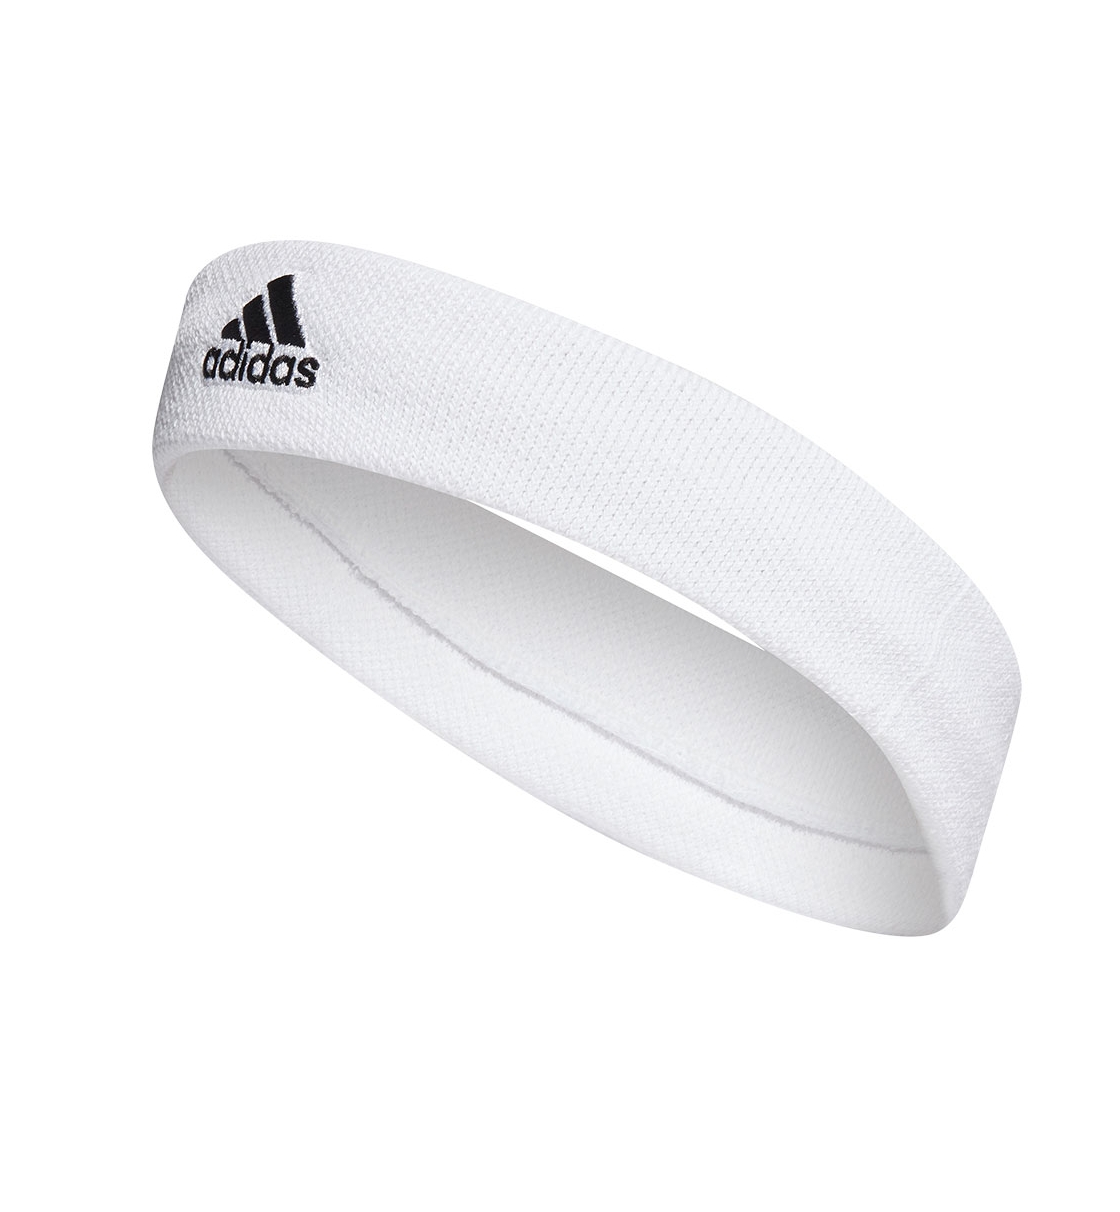 Adidas Ss22 Tennis Headband